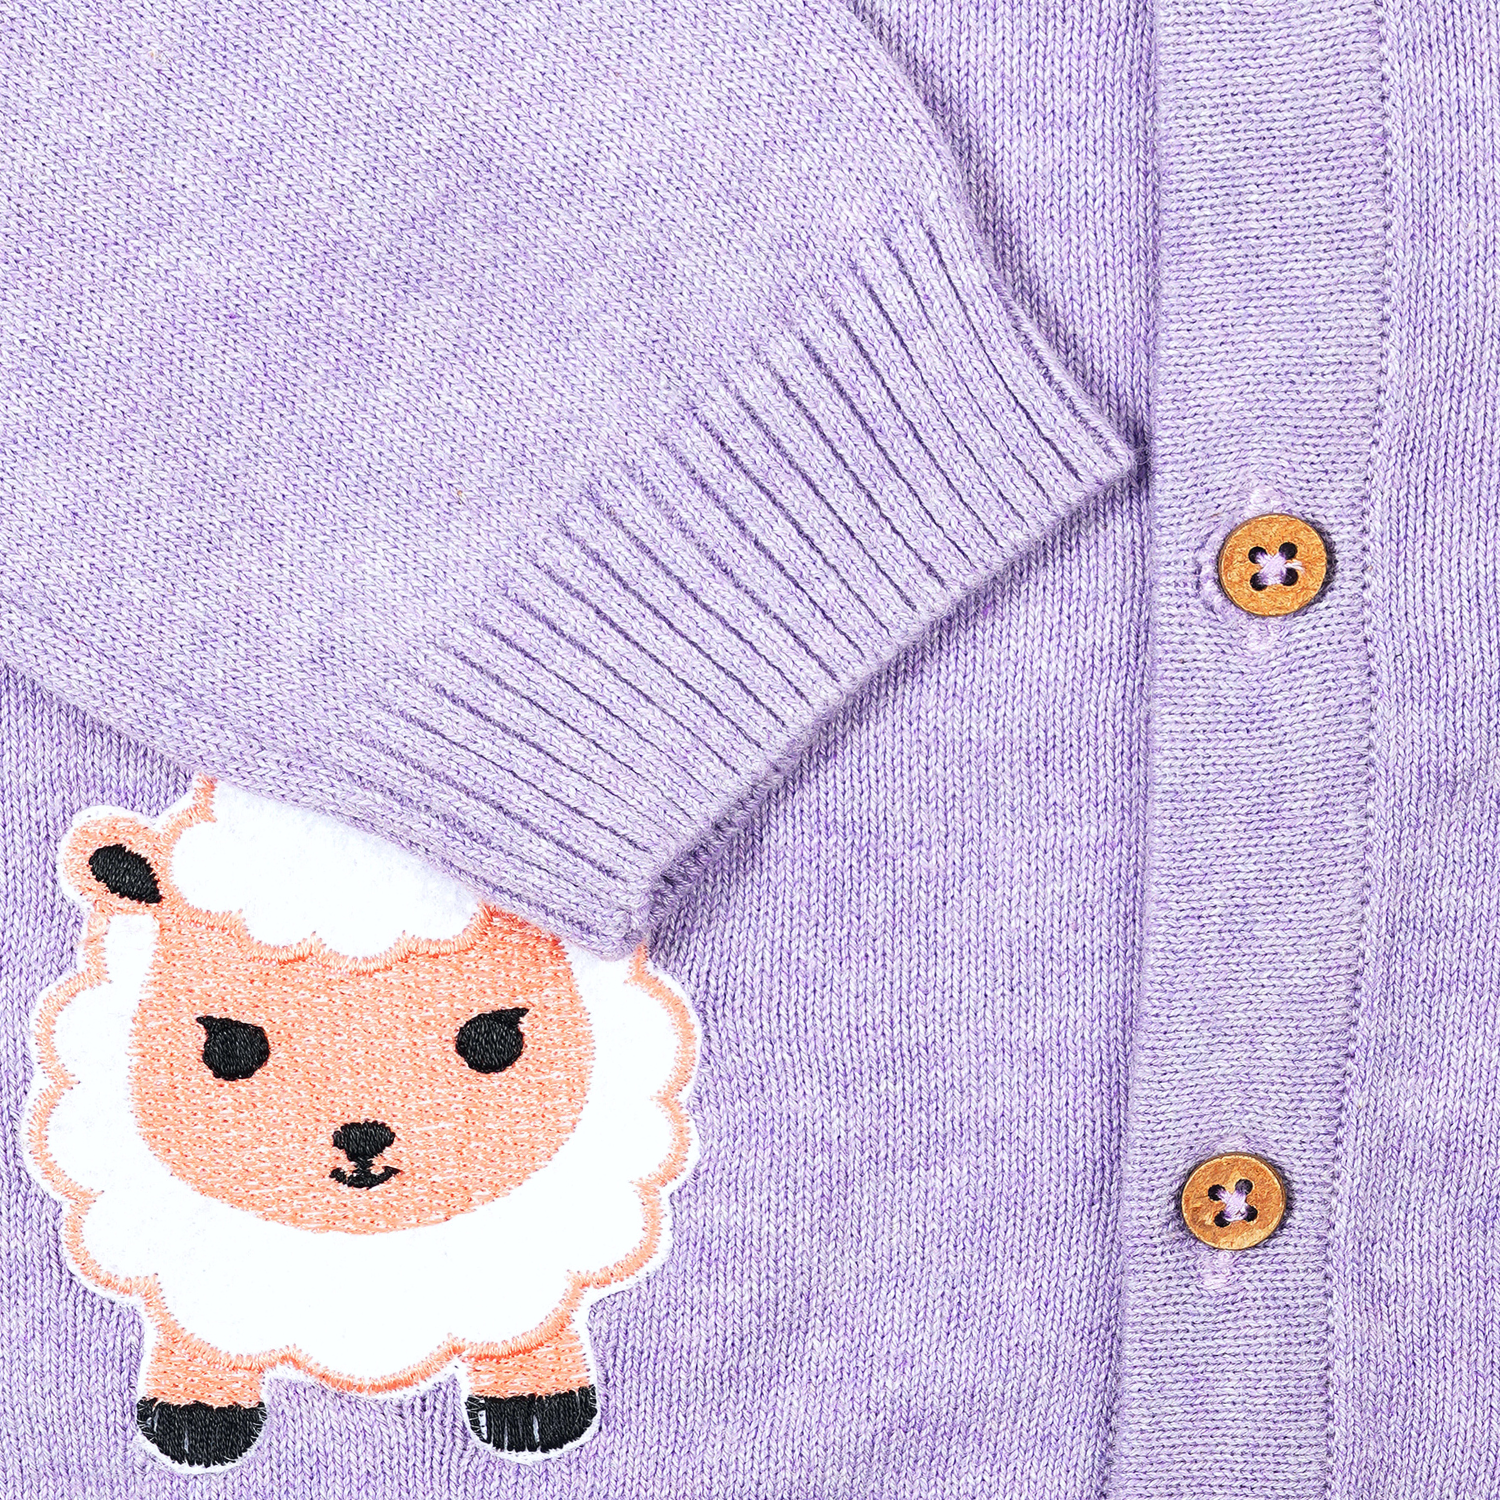 Lavender Fluffy Sheep Sweater Set